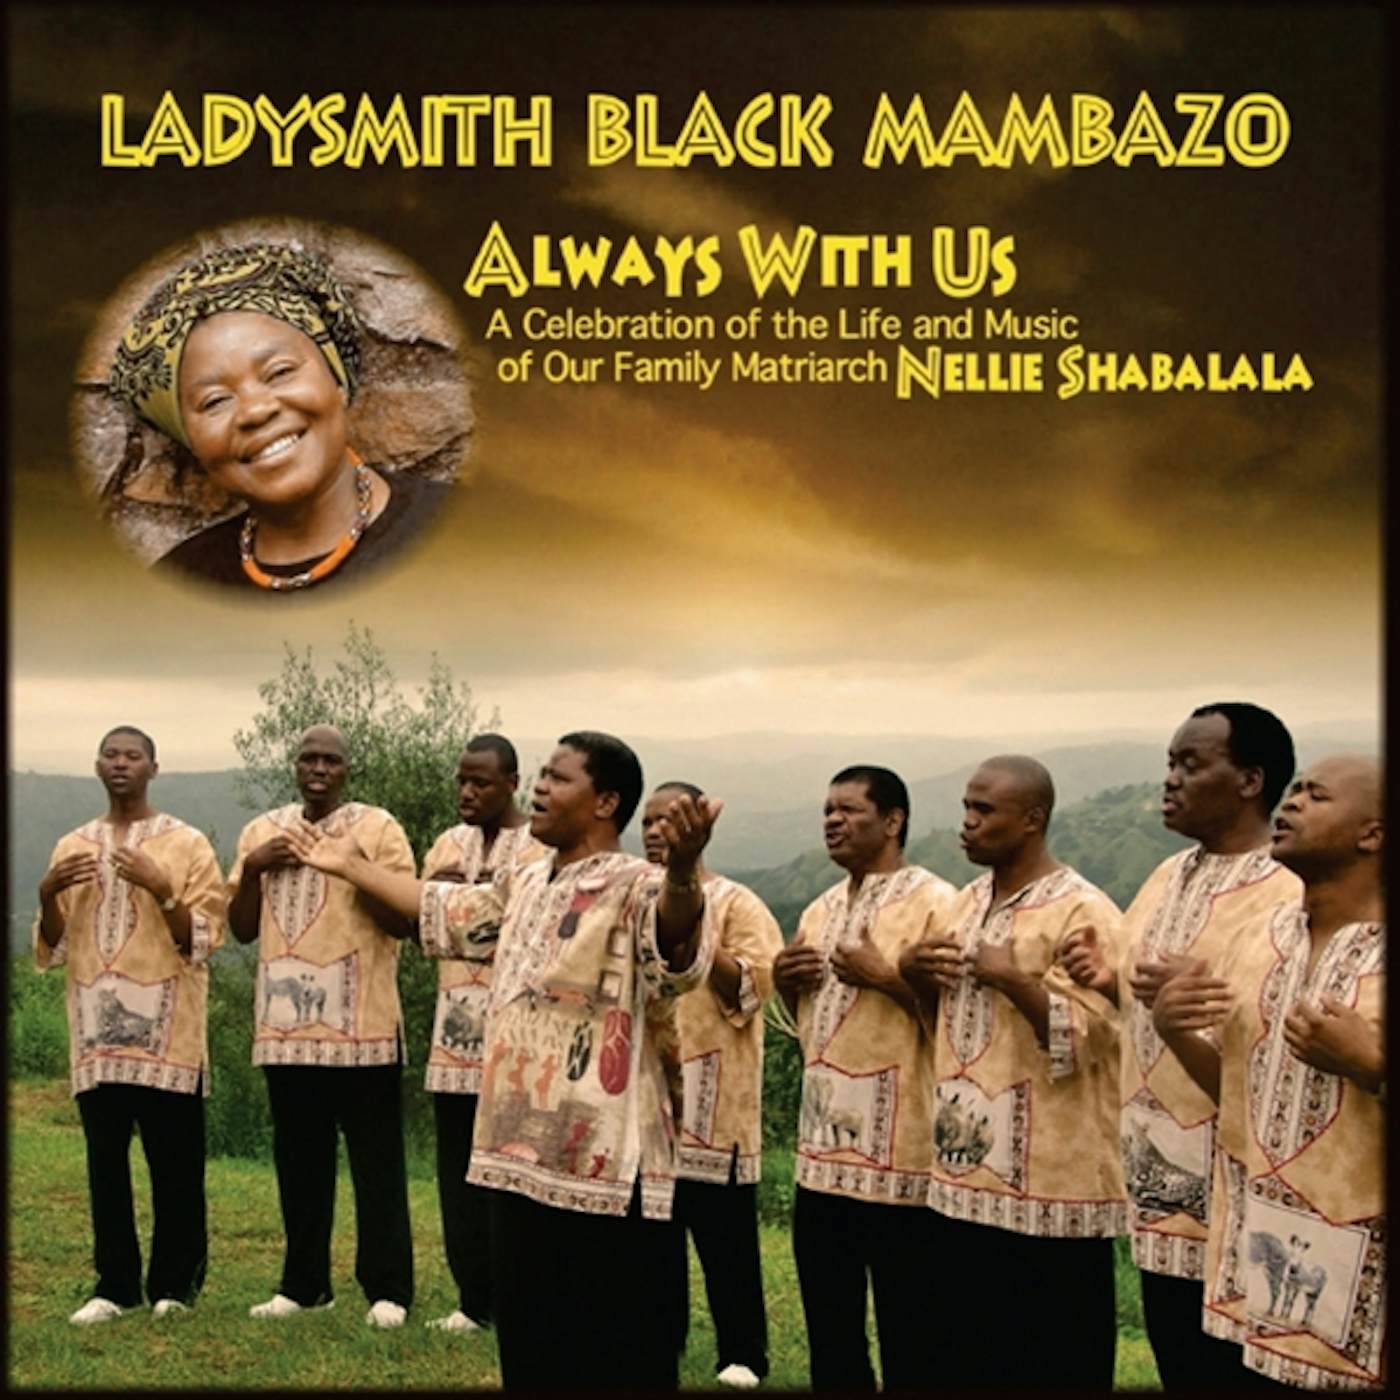 Ladysmith Black Mambazo ALWAYS WITH US CD